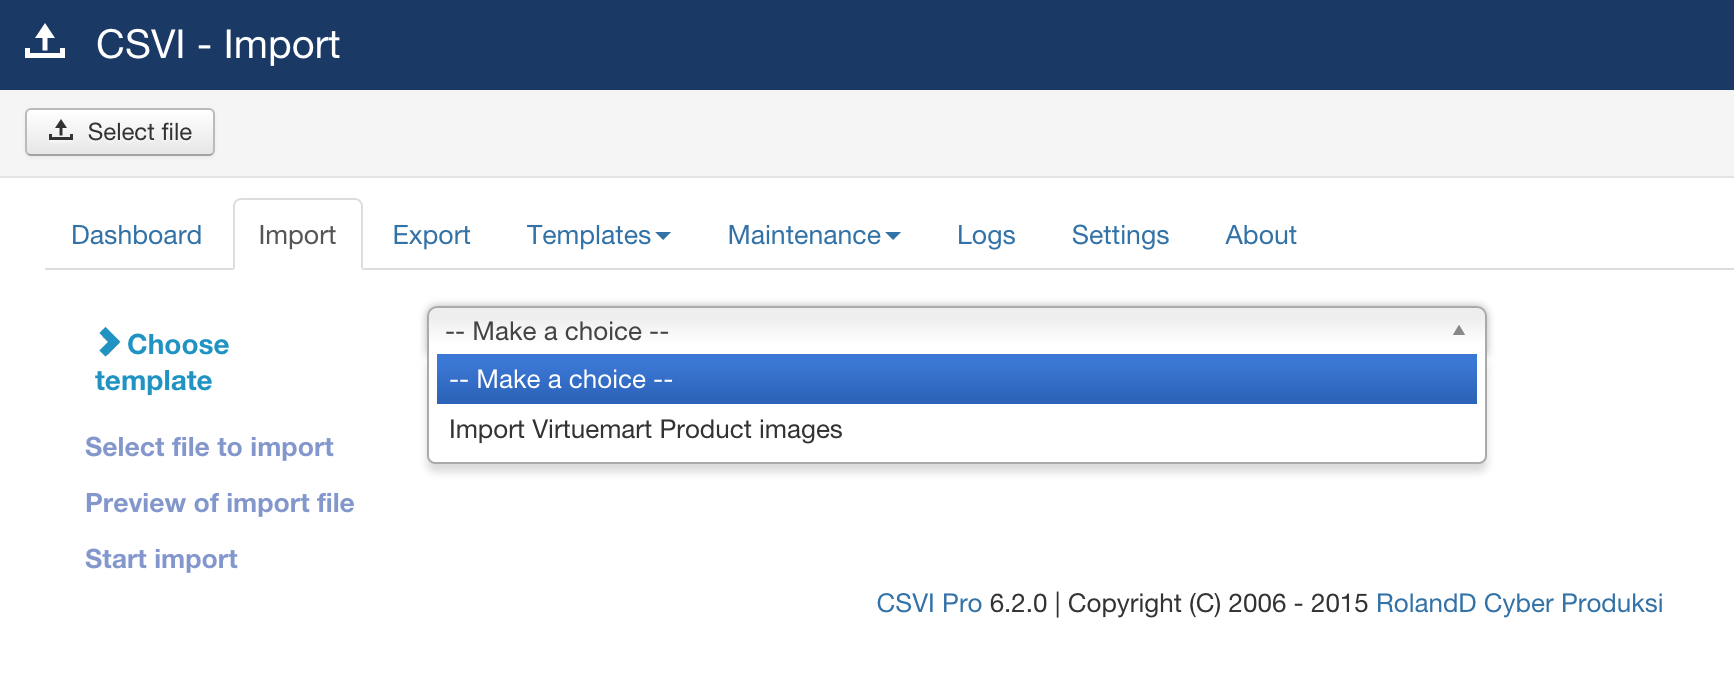 csvi6 select import template